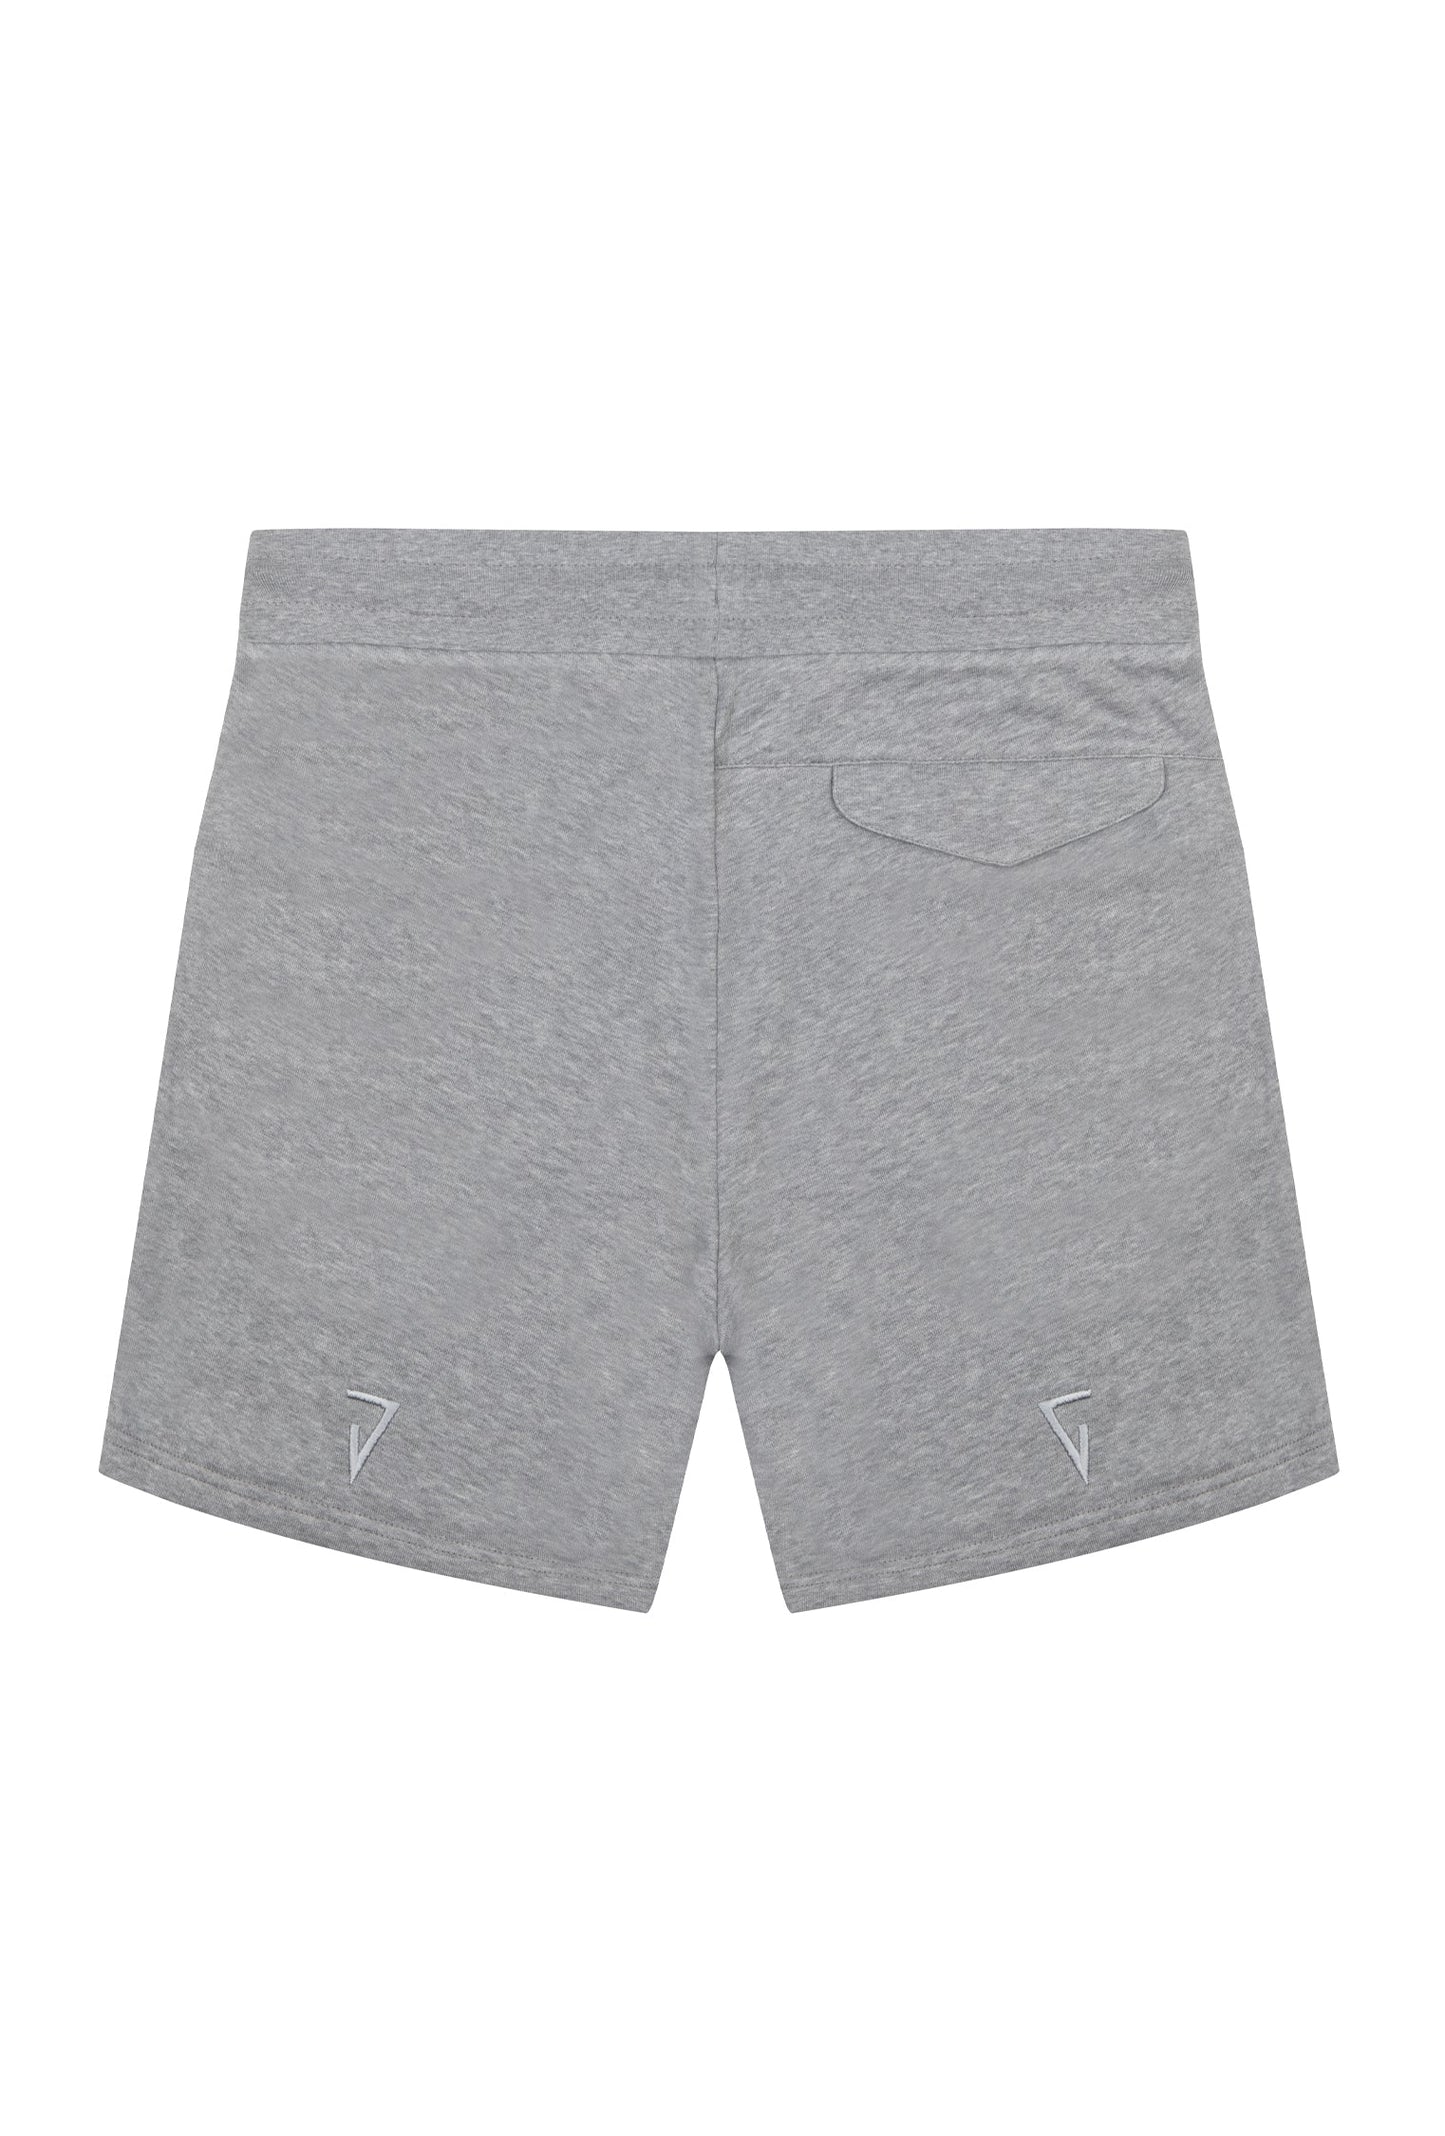 Classic Cotton Shorts- Grey